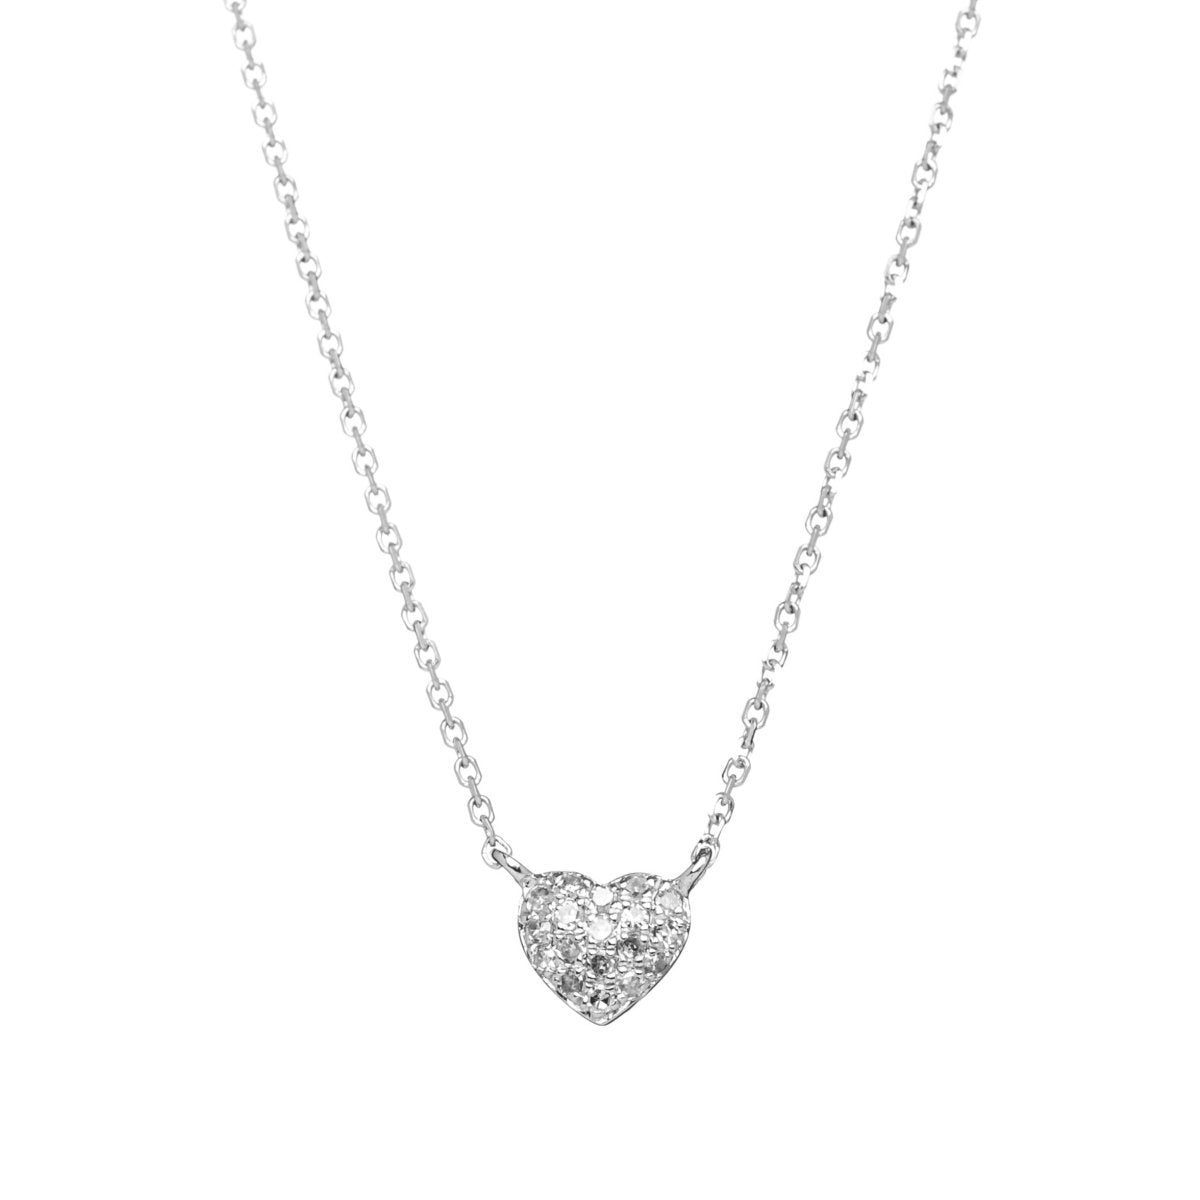 Tiny Diamond Heart Necklace in 14k Gold